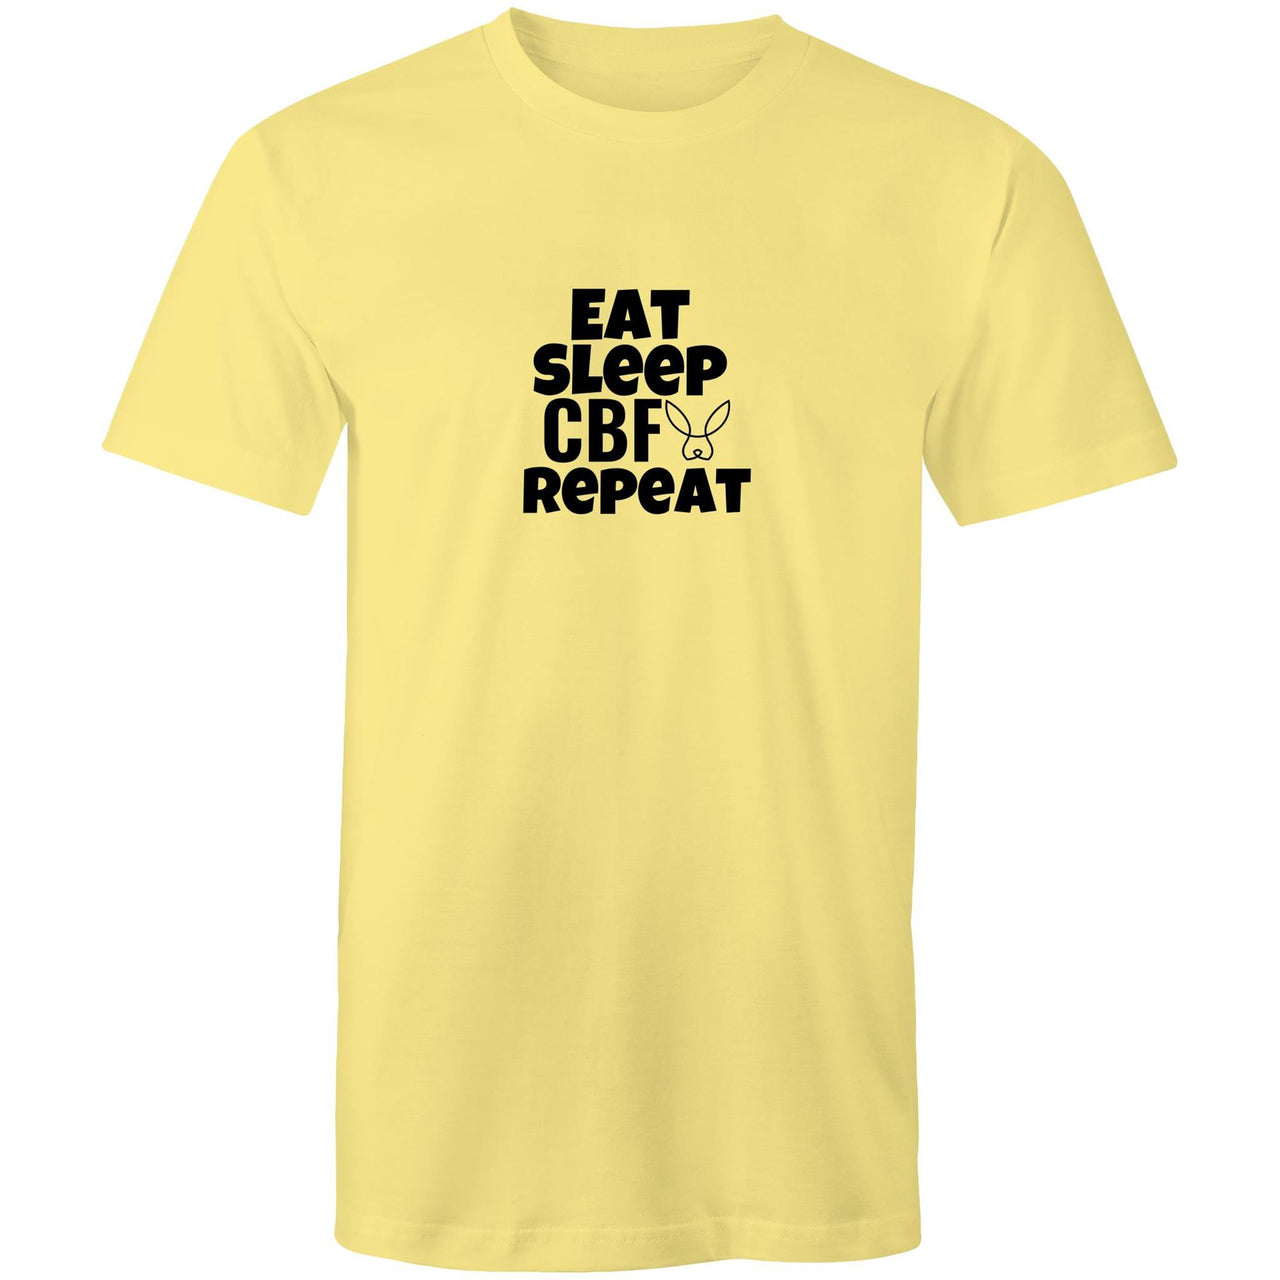 Eat Sleep CBF Repeat Crew Yellow T-Shirt by CBF Clothing